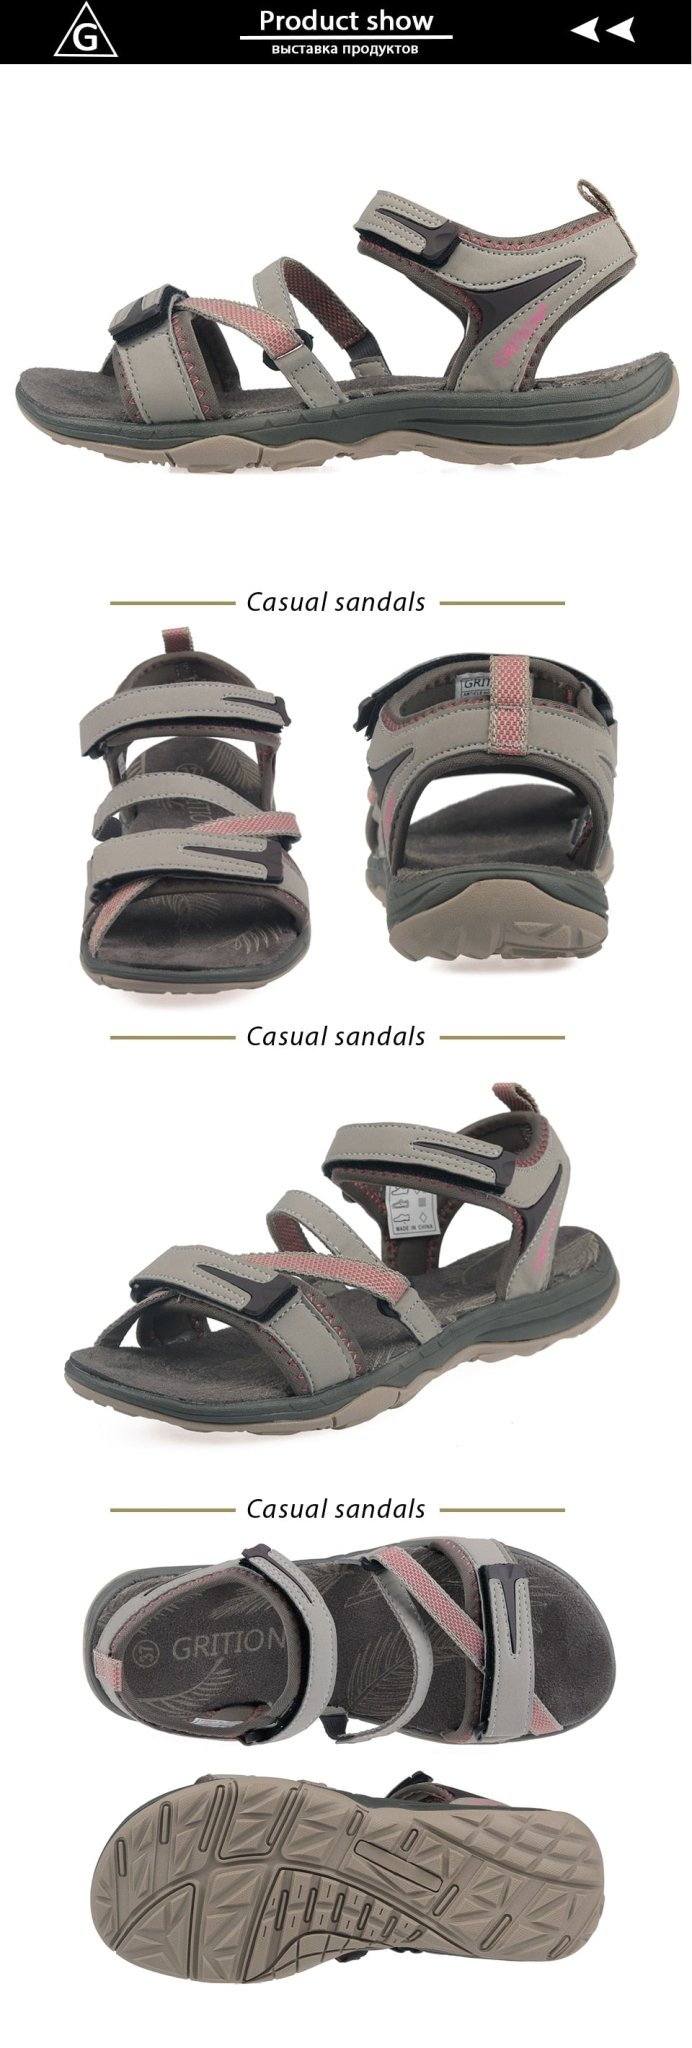 Beach Sandals Women Summer Outdoor Flat Sandals Ladies Open Toe Shoes Lightweight Breathable Walking Hiking Sandals-16